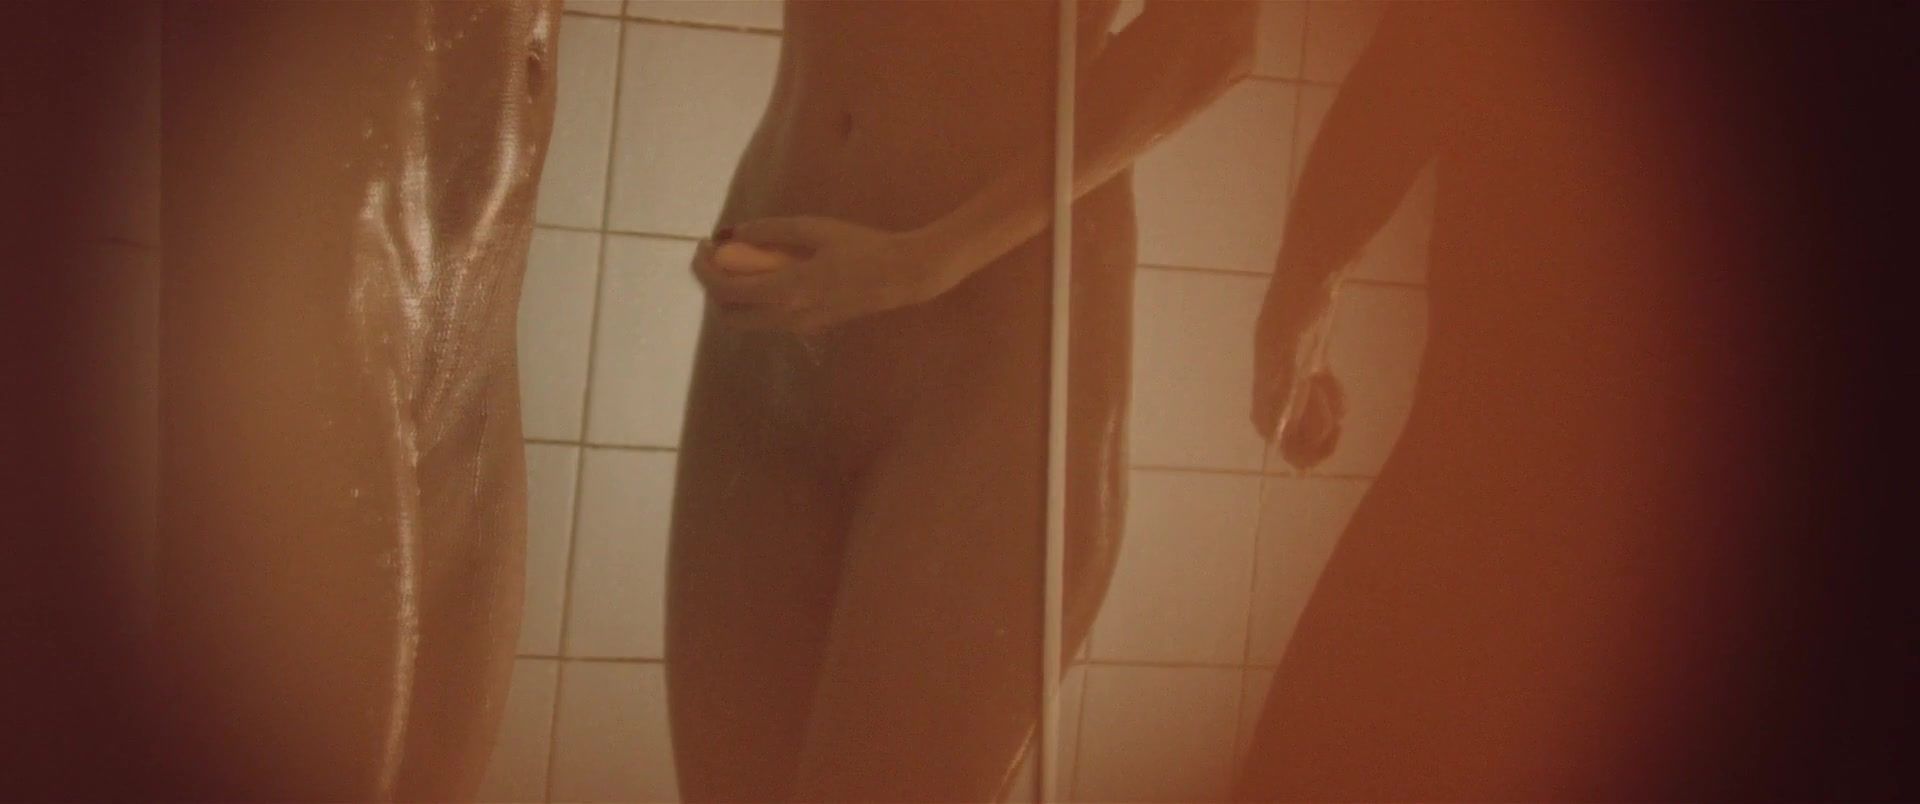 Car Vica Kerekes nude - Pribeh kmotra (2013) Tight Pussy Fucked - 2